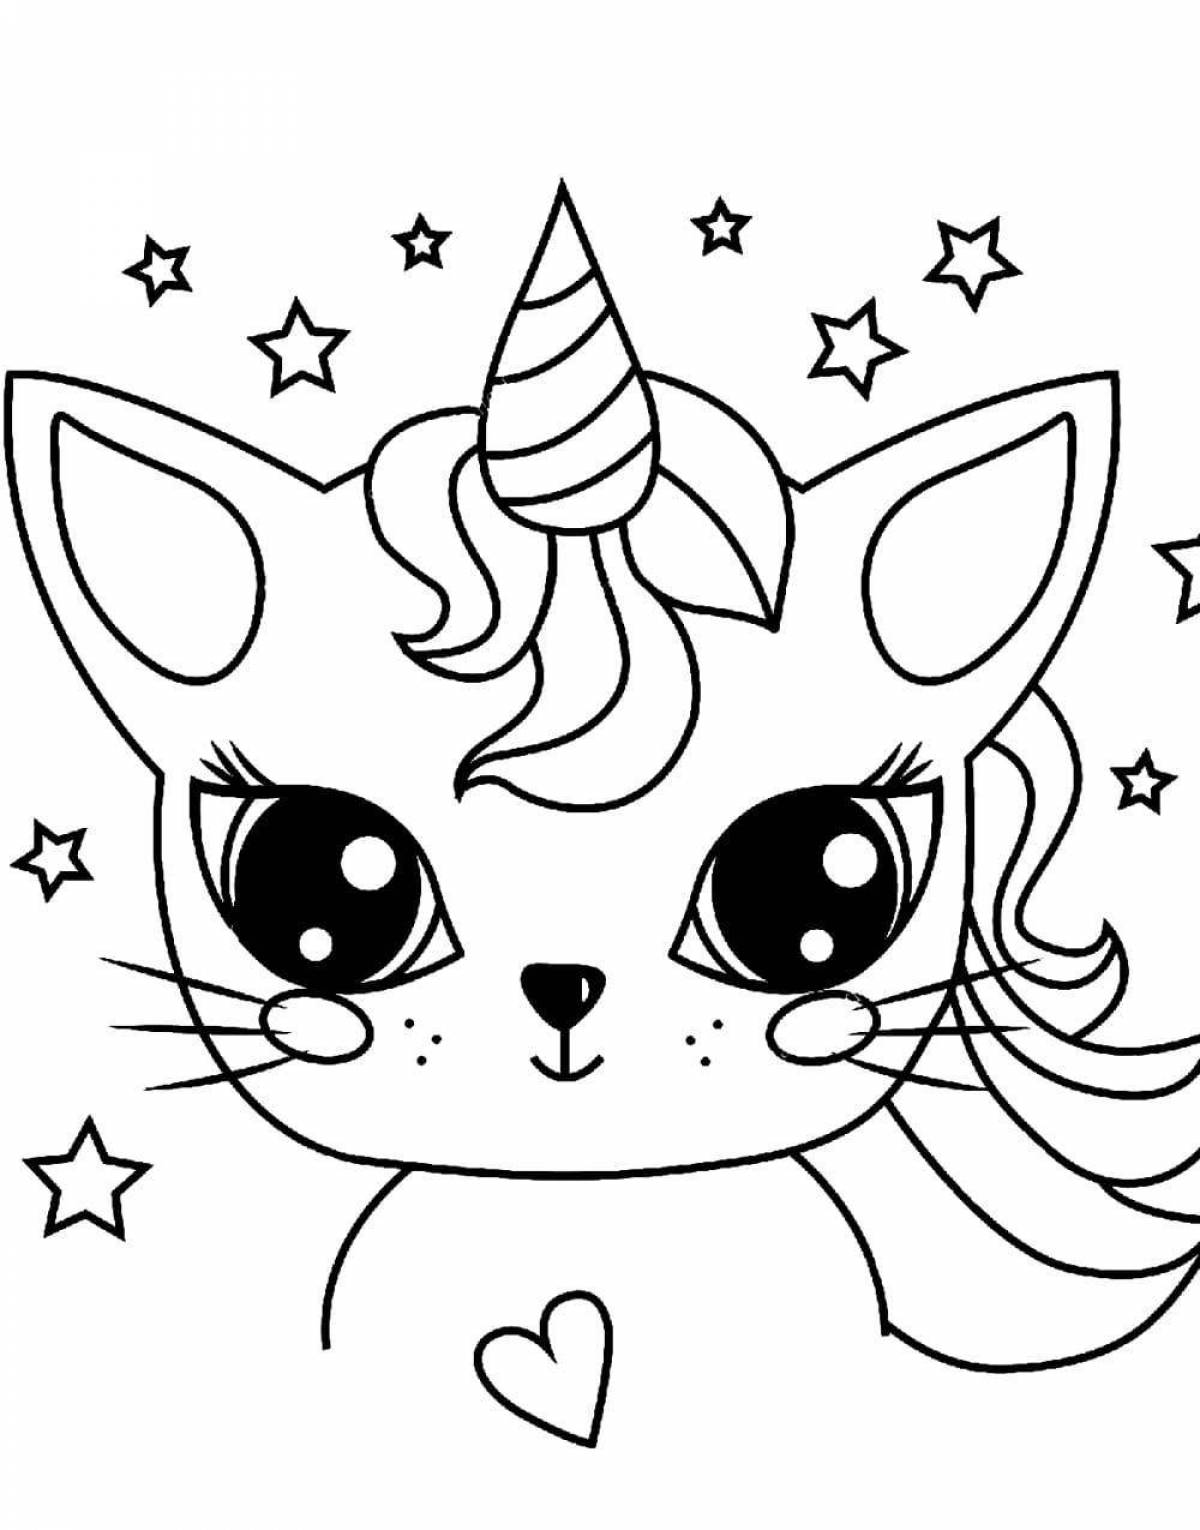 Violent unicorn cat coloring book for kids